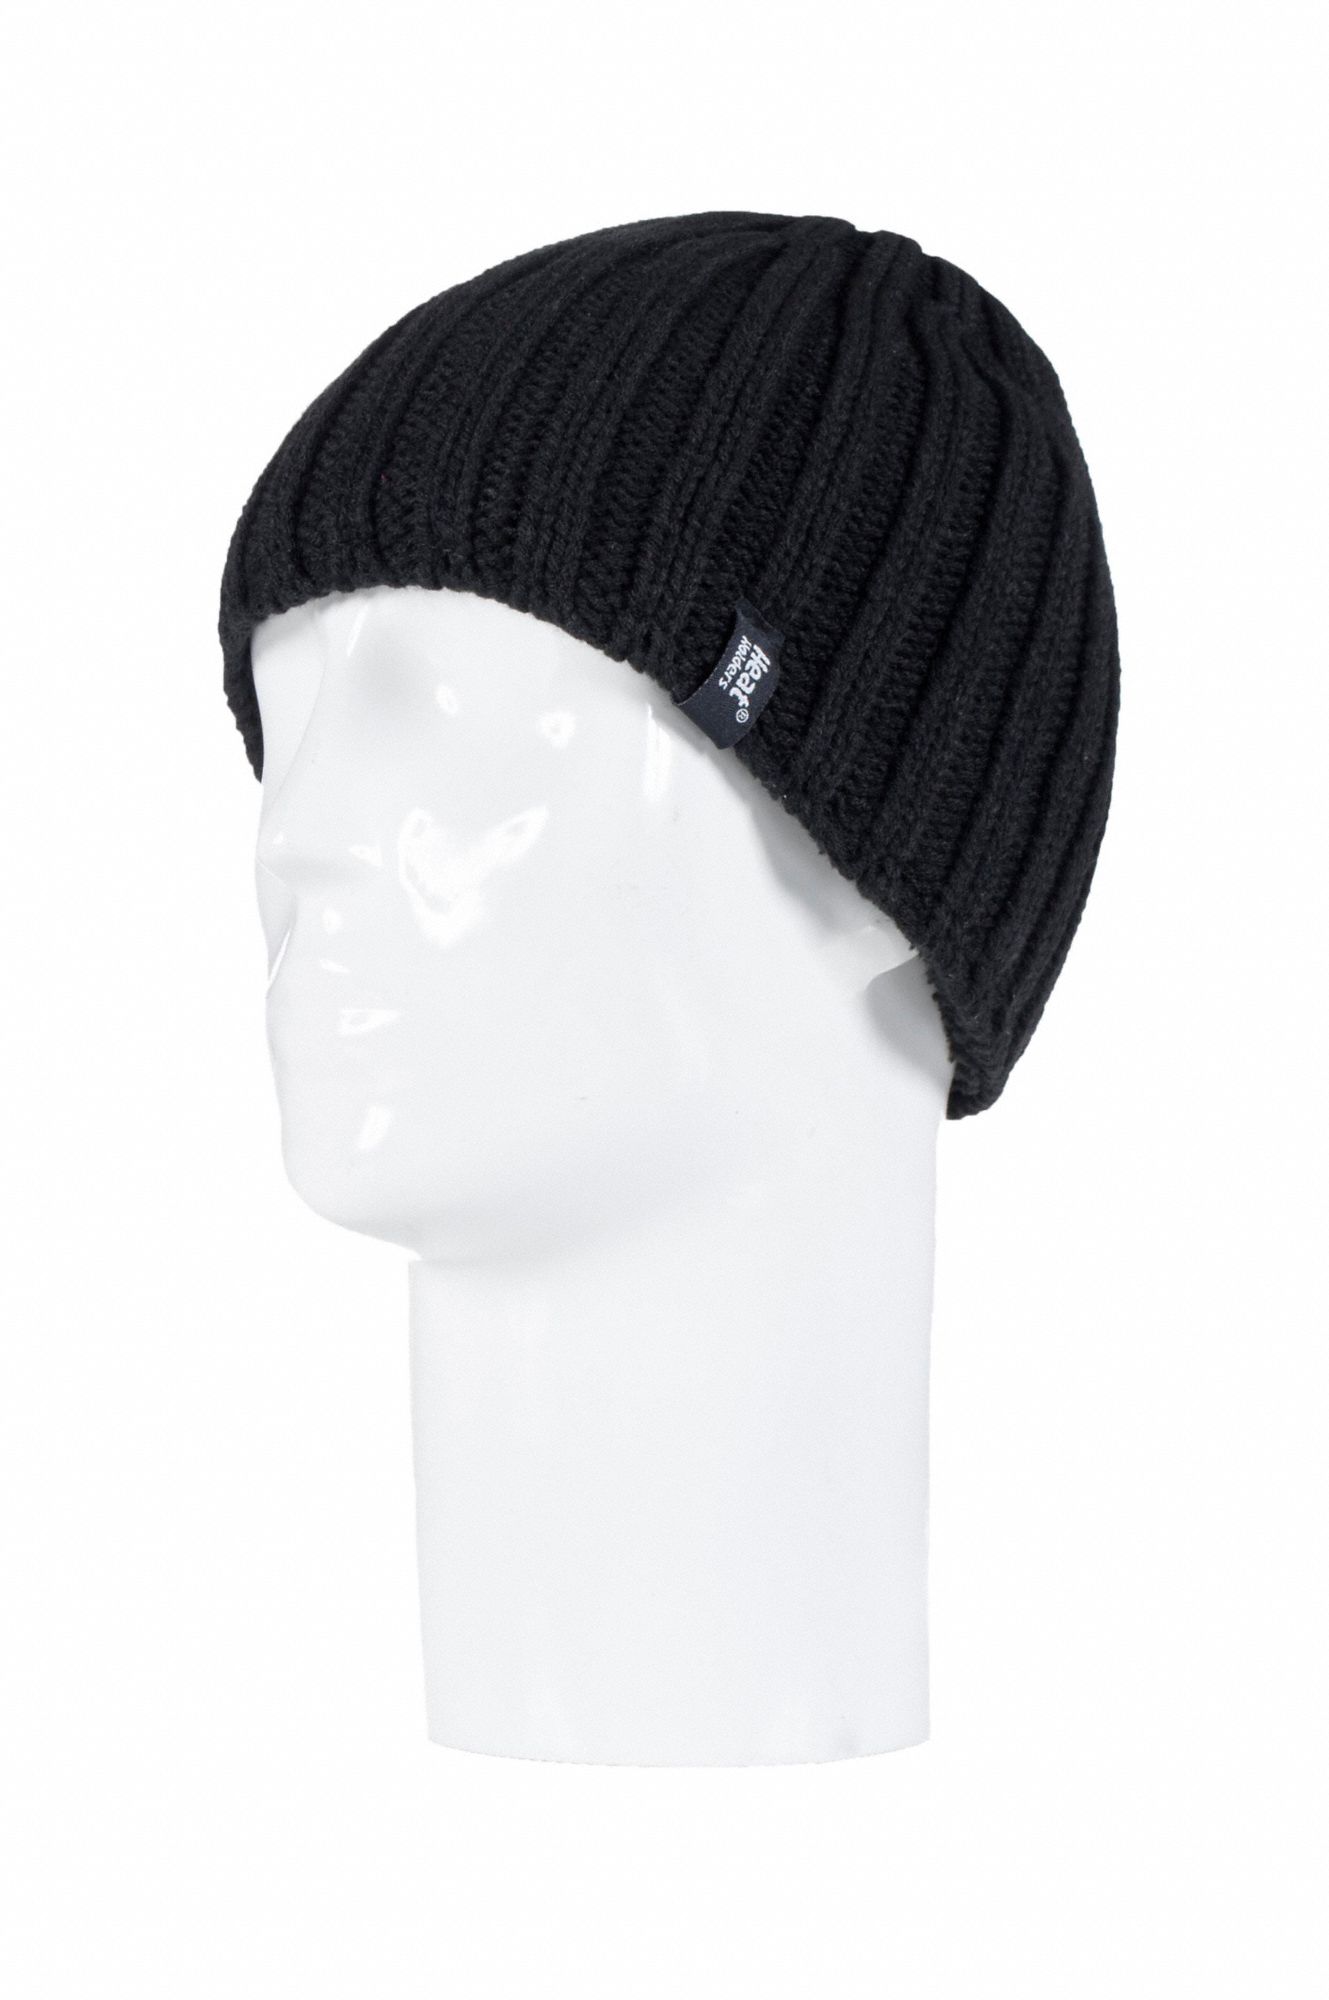 Black for sale online MHHH910BLK Heat Holders Mens Hat One Size 